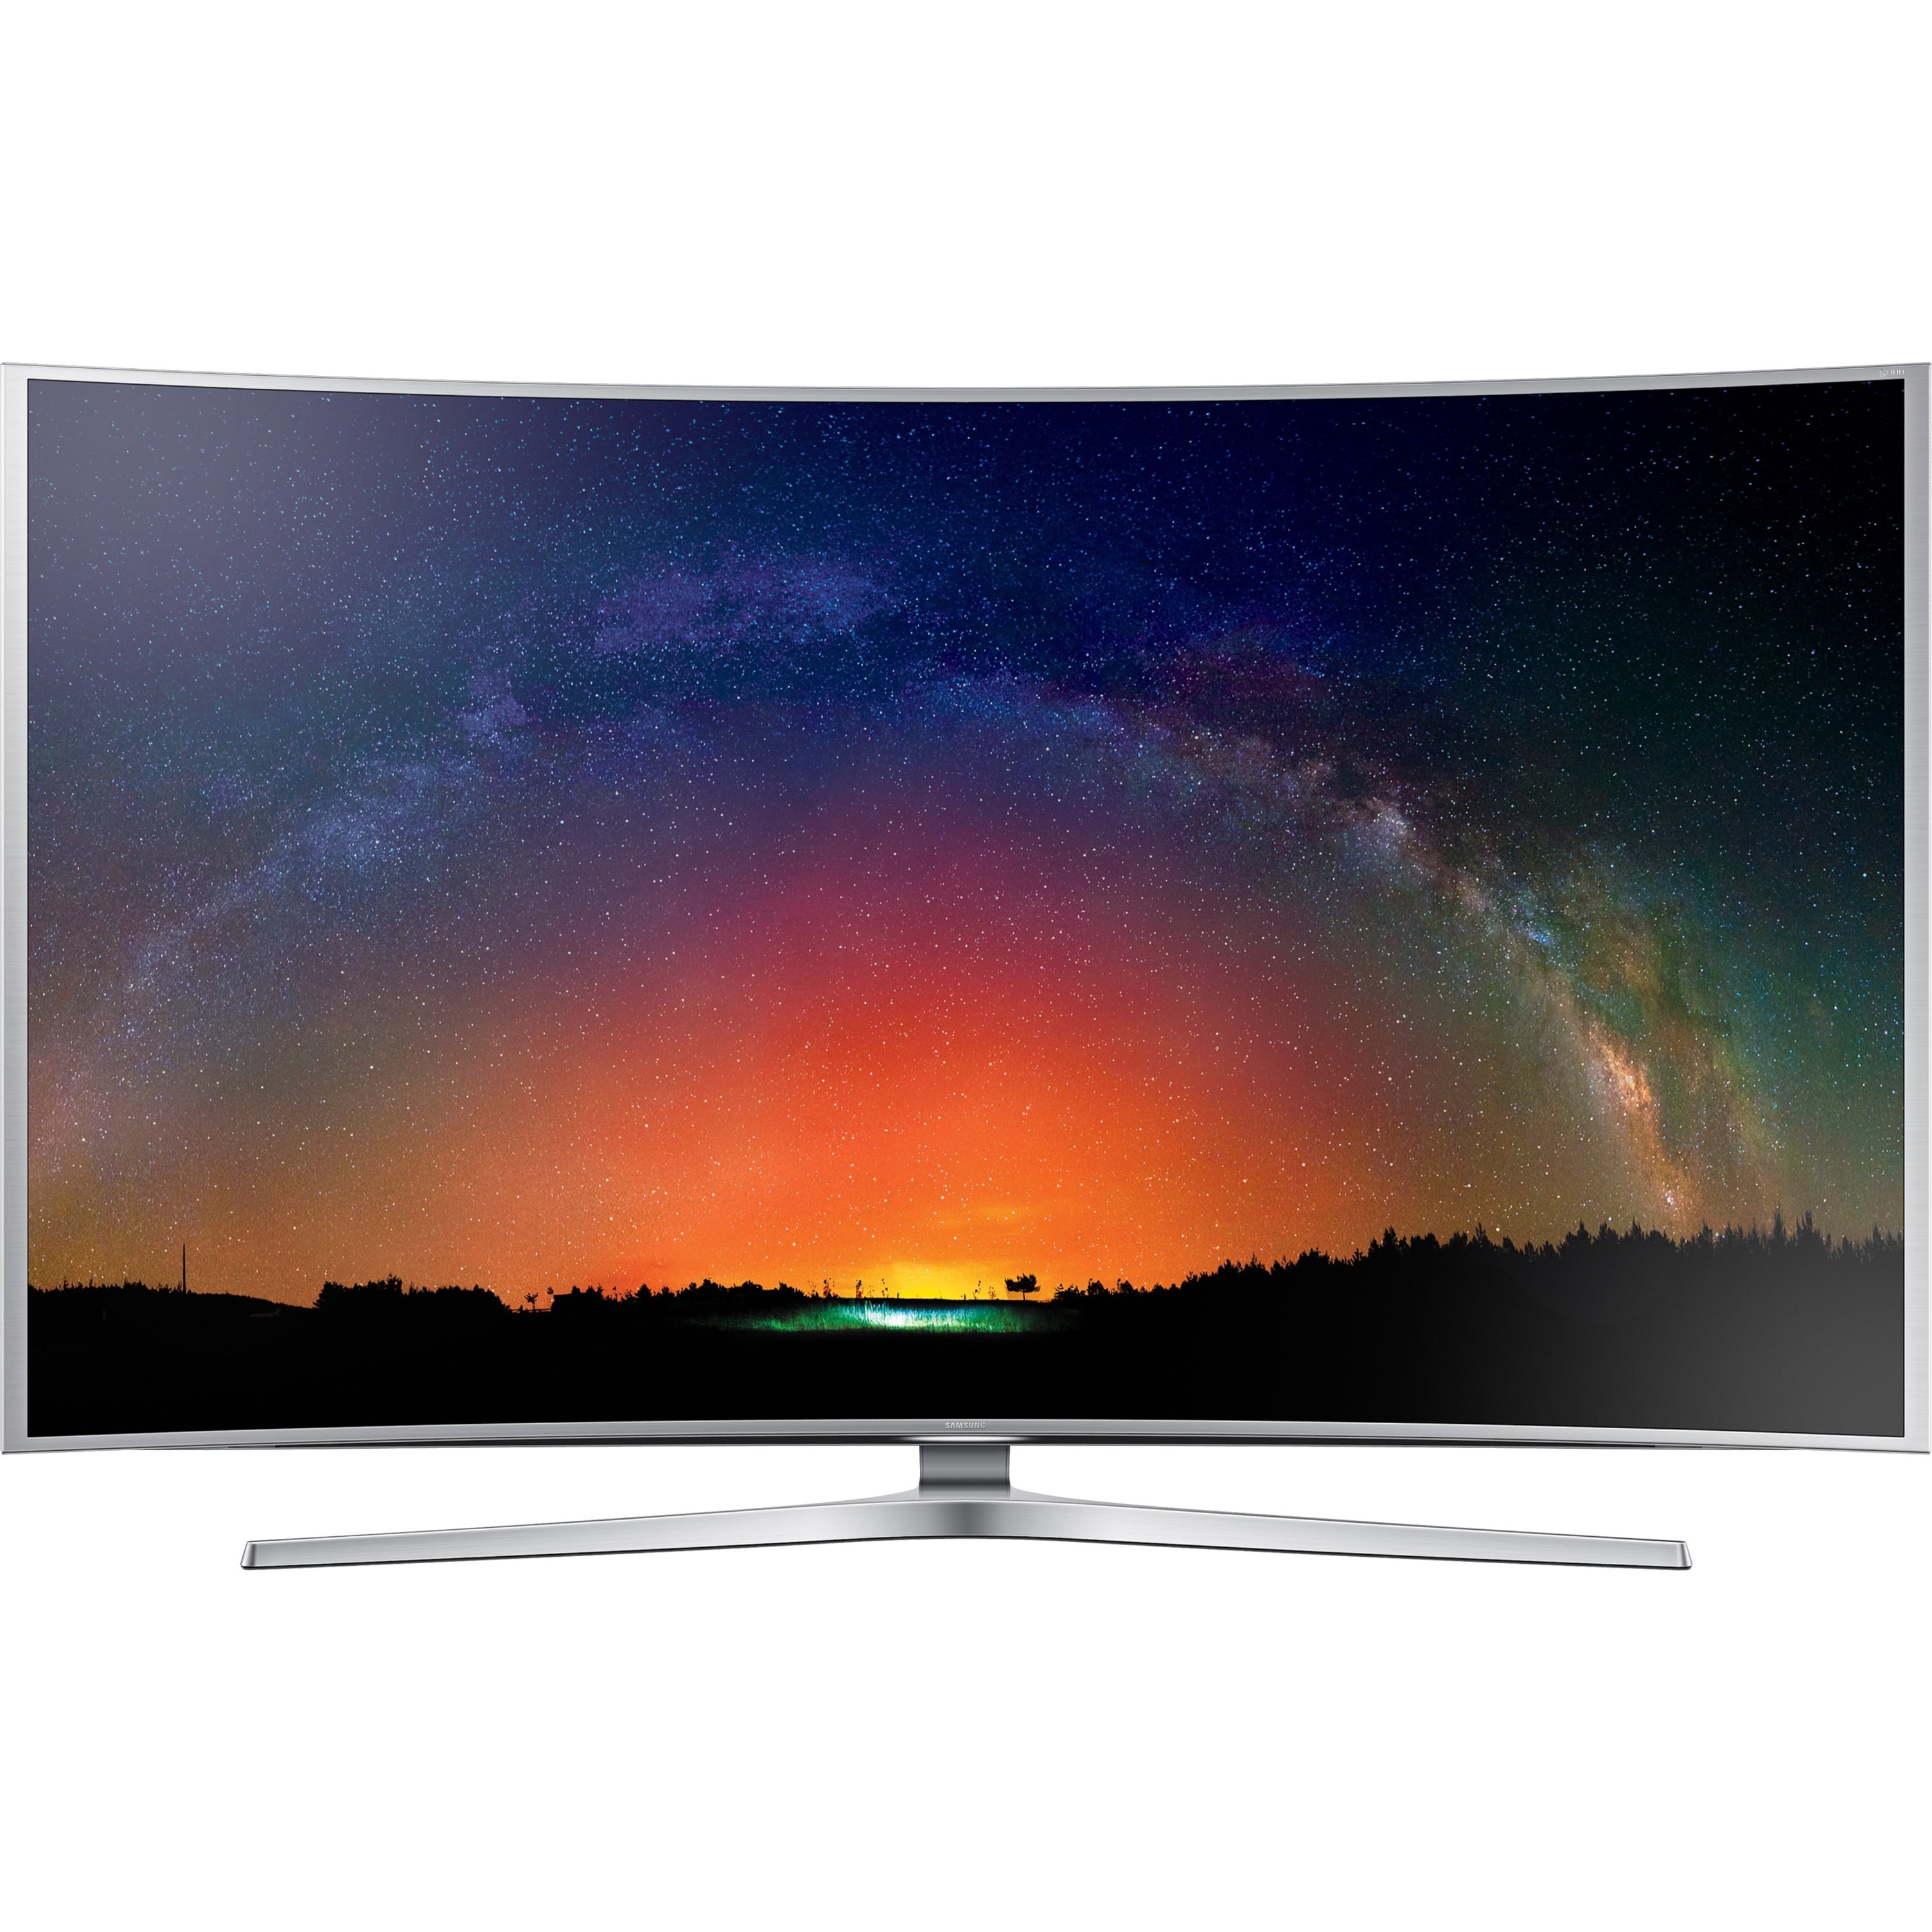 Телевизор самсунг в новосибирске. Samsung ue65js9000. Samsung ue55js9000. Samsung ue55js7200u. Samsung ue65js9000t телевизор.